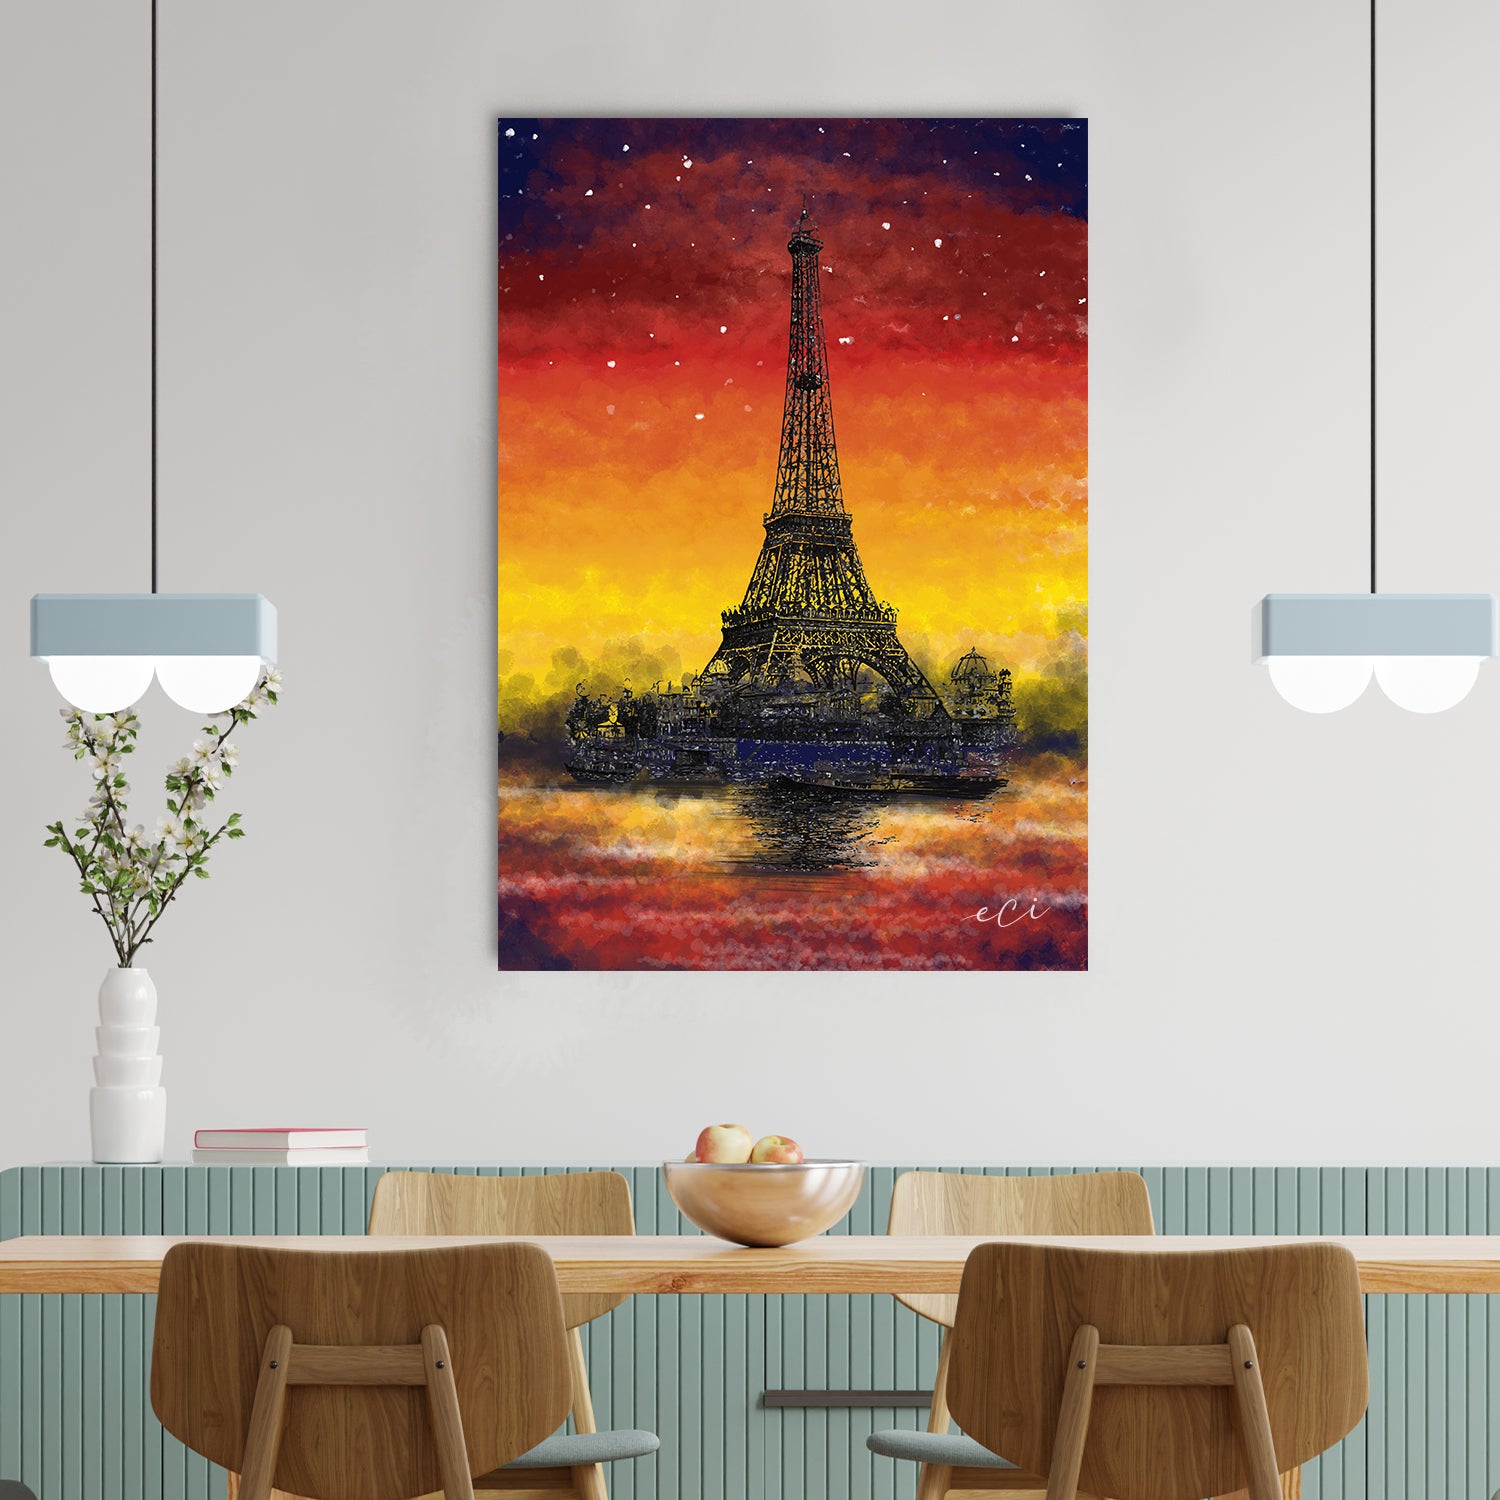 Paris Eiffel Tower Canvas Painting Digital Printed Religious Wall Art